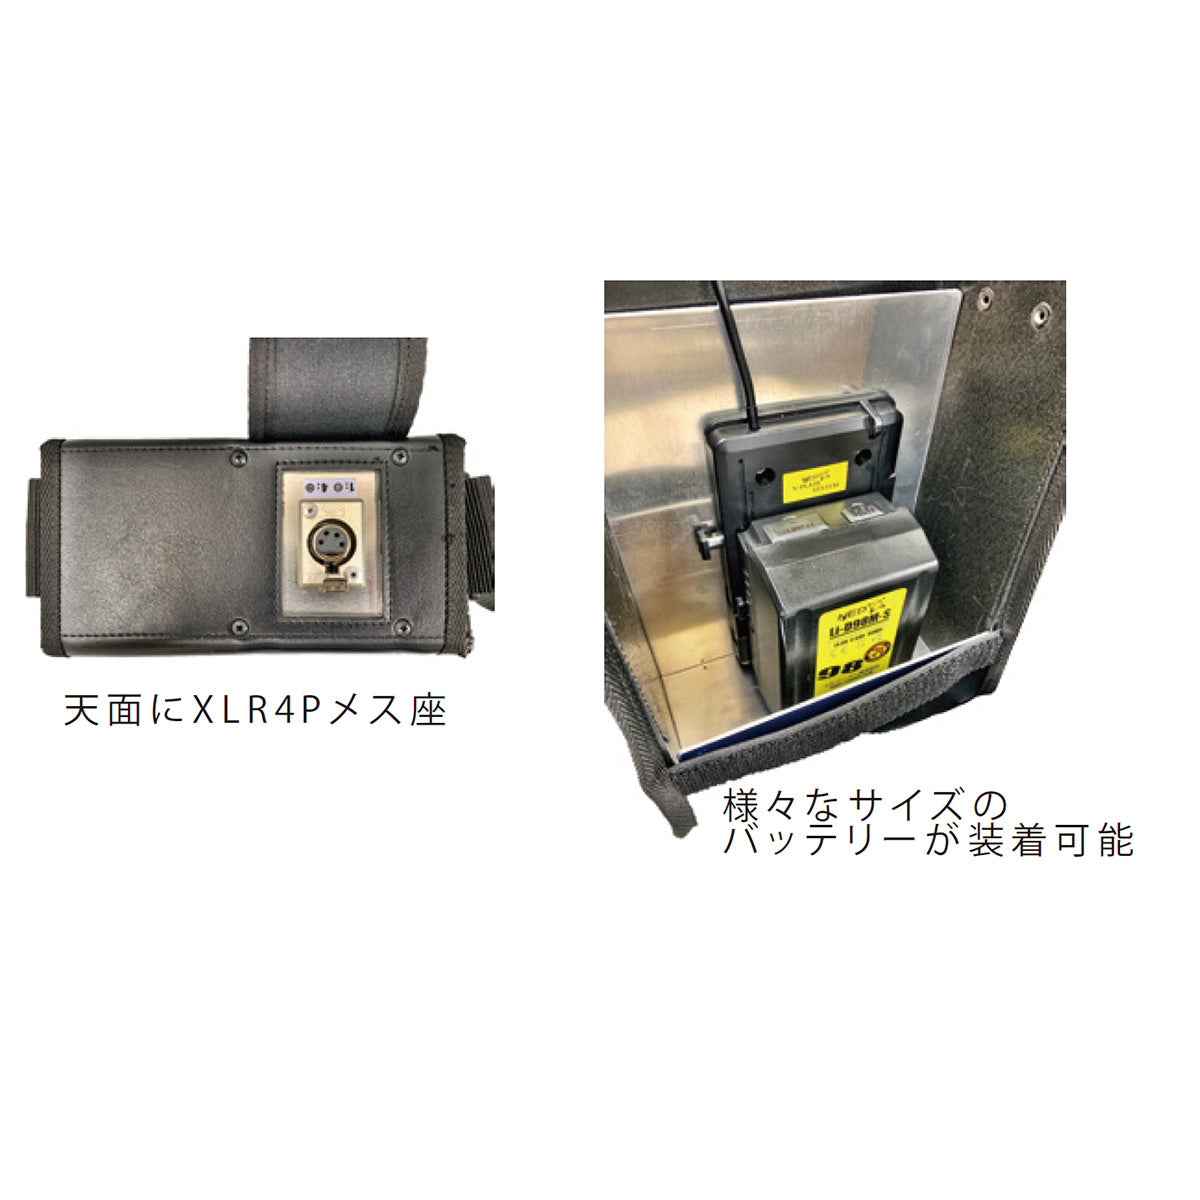 NEP Leather case for one V-mount battery (with V-mount plate) LV-S5V